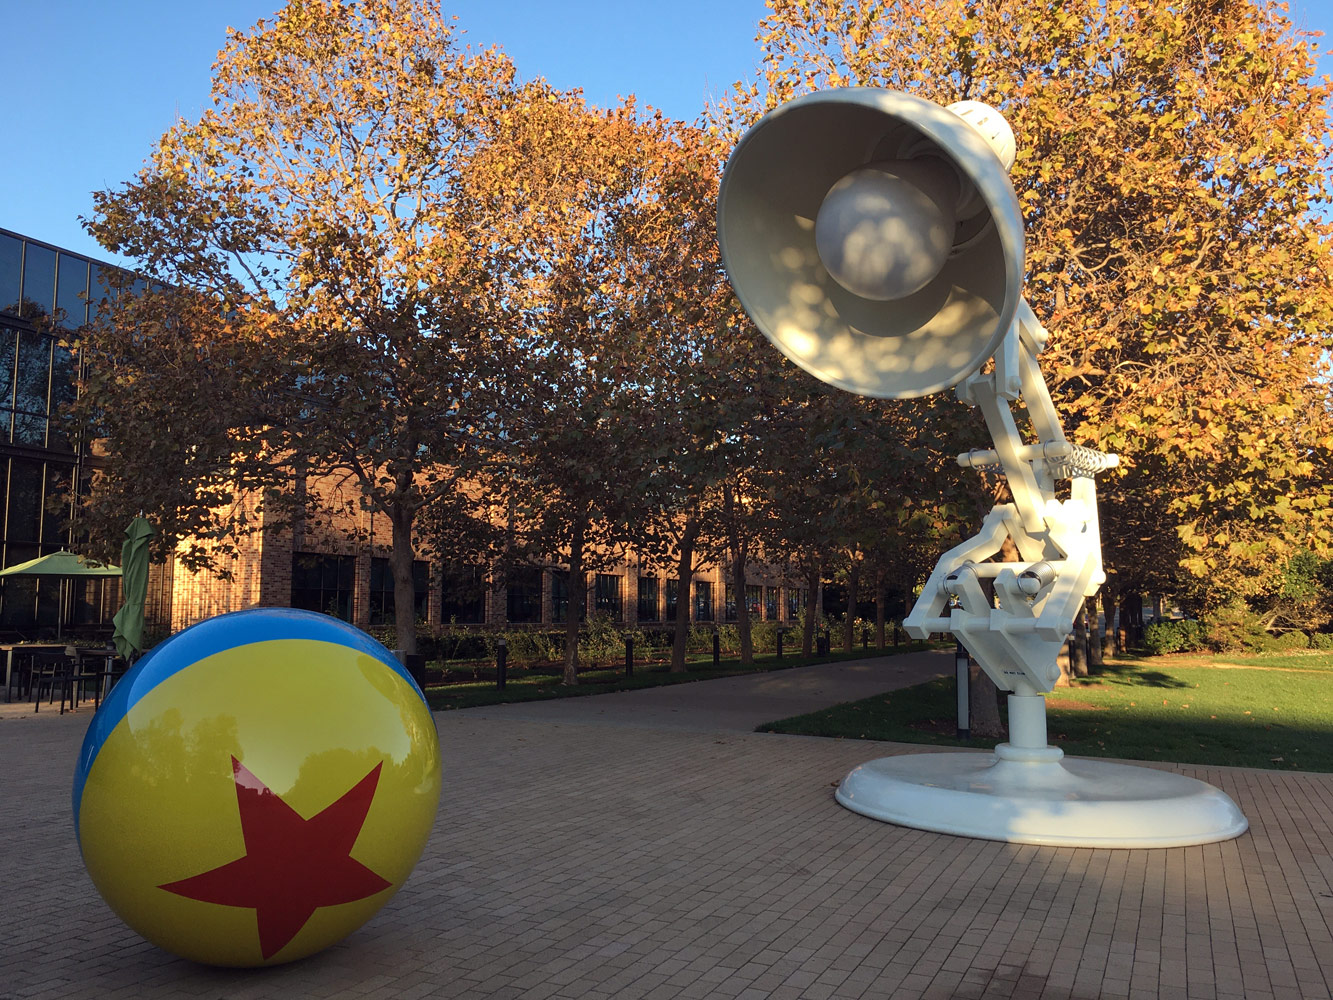 Pixar's famous Lamp and Ball 